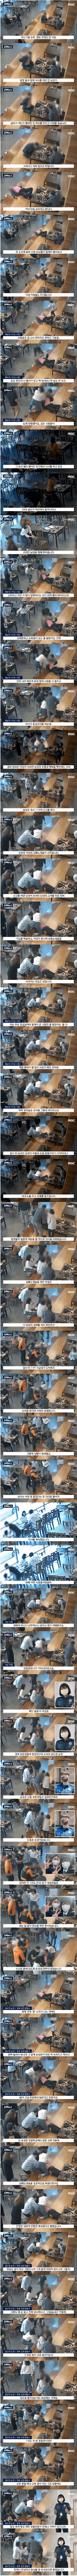 image.png 경북 구미 한 식당의 20대 남녀